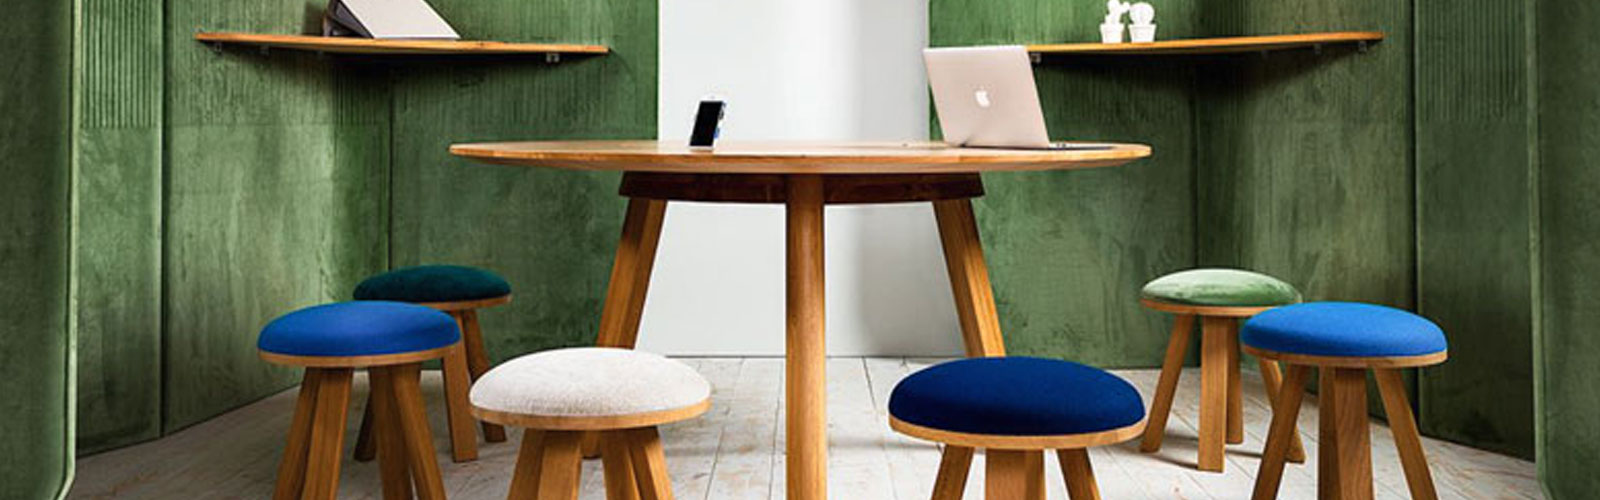 BuzziMilk stool and Acoustic screen in informal meeting space